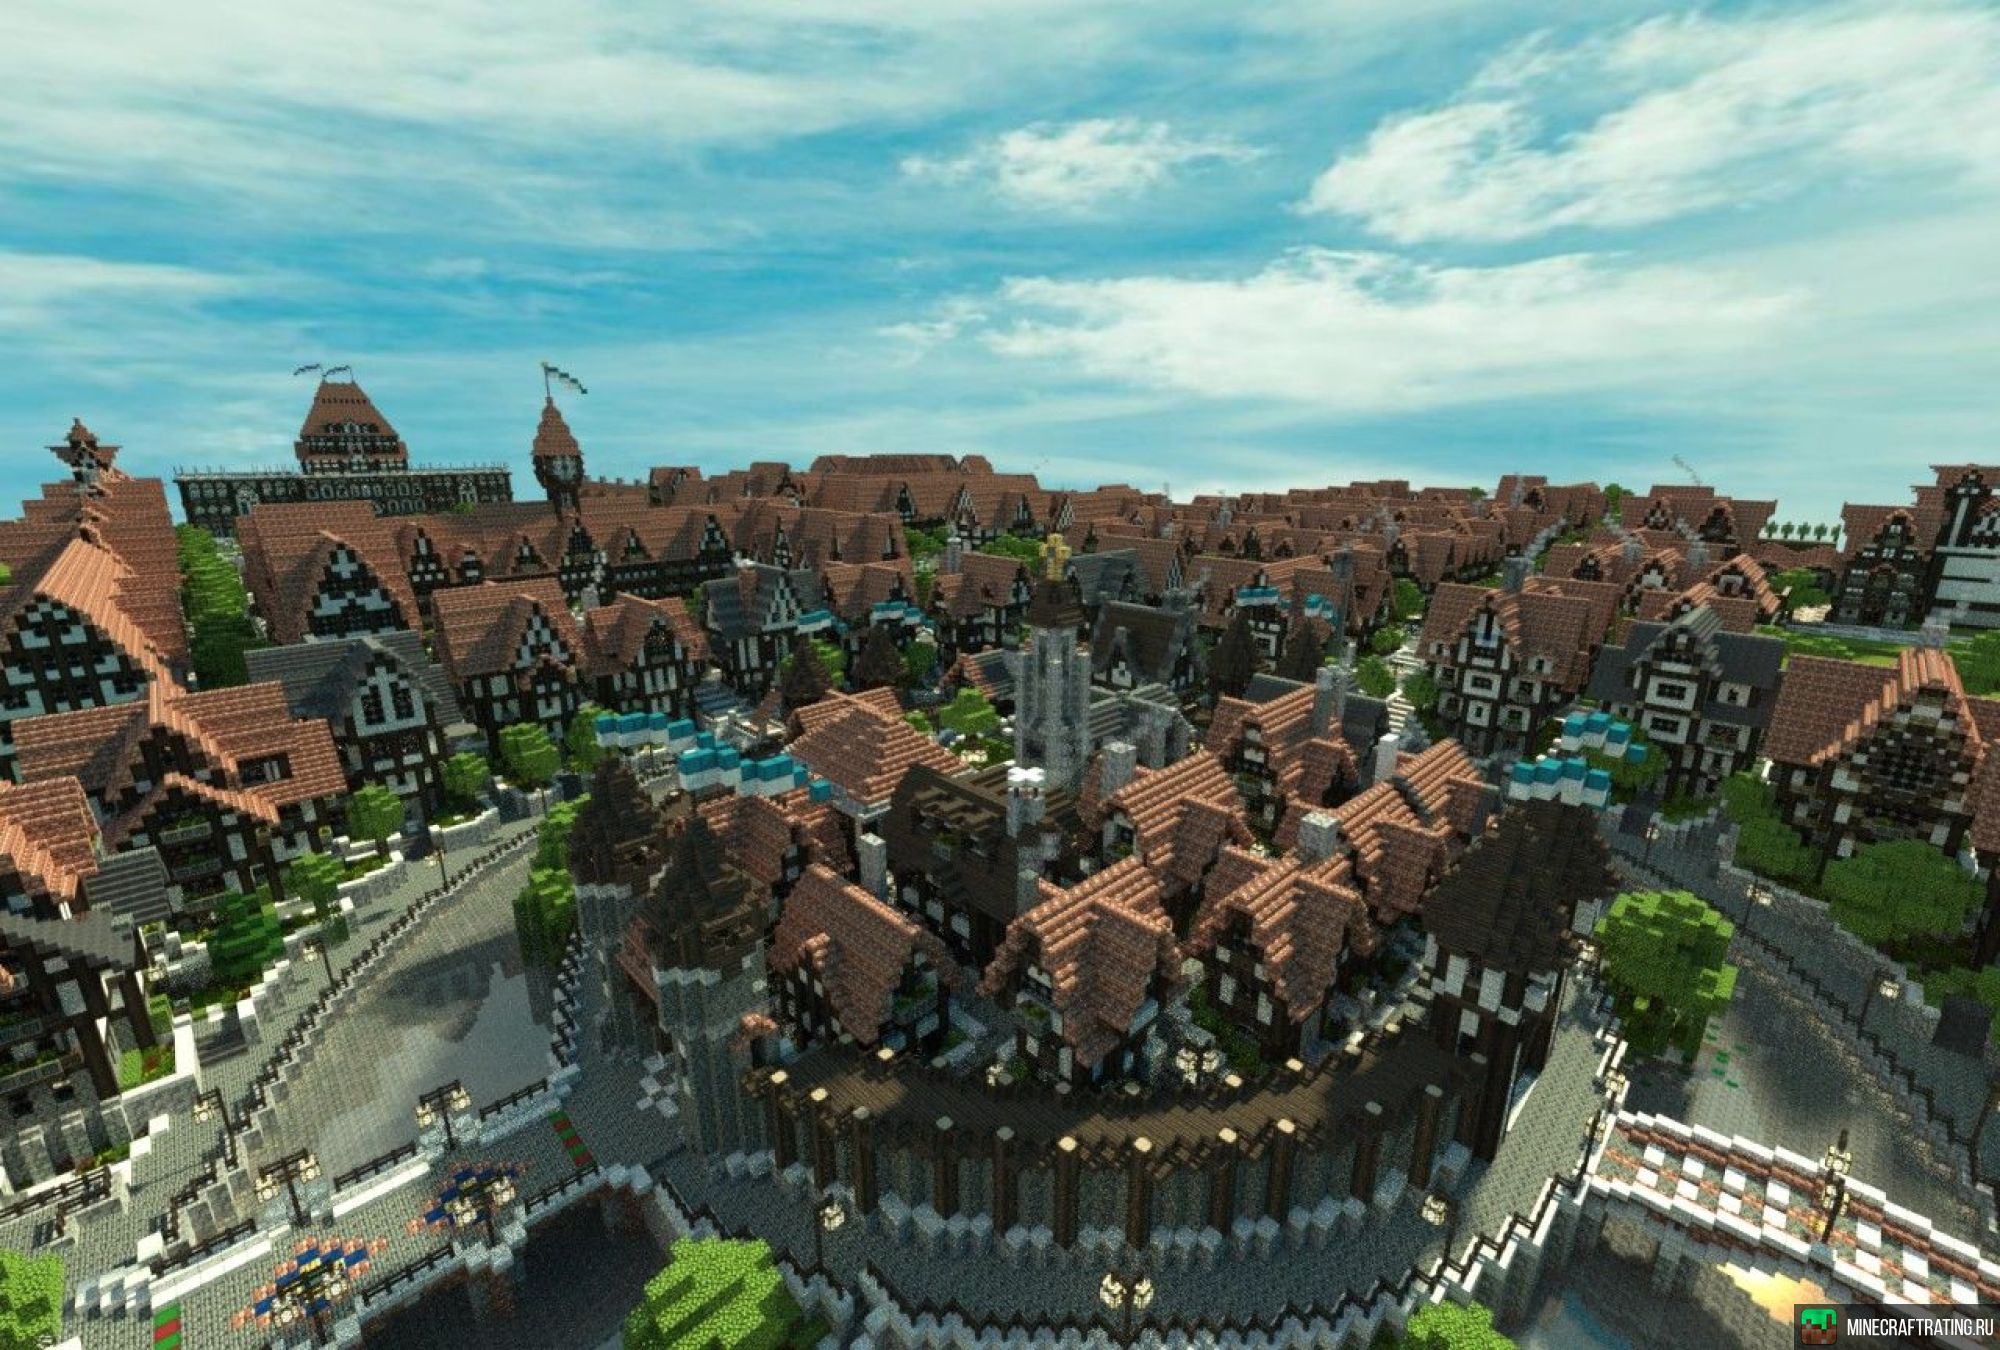 Minecraft town. Medieval City карта майнкрафт. Minecraft средневековый город. Майнкрафт город средневековья. Карта средневекового города майнкрафт.